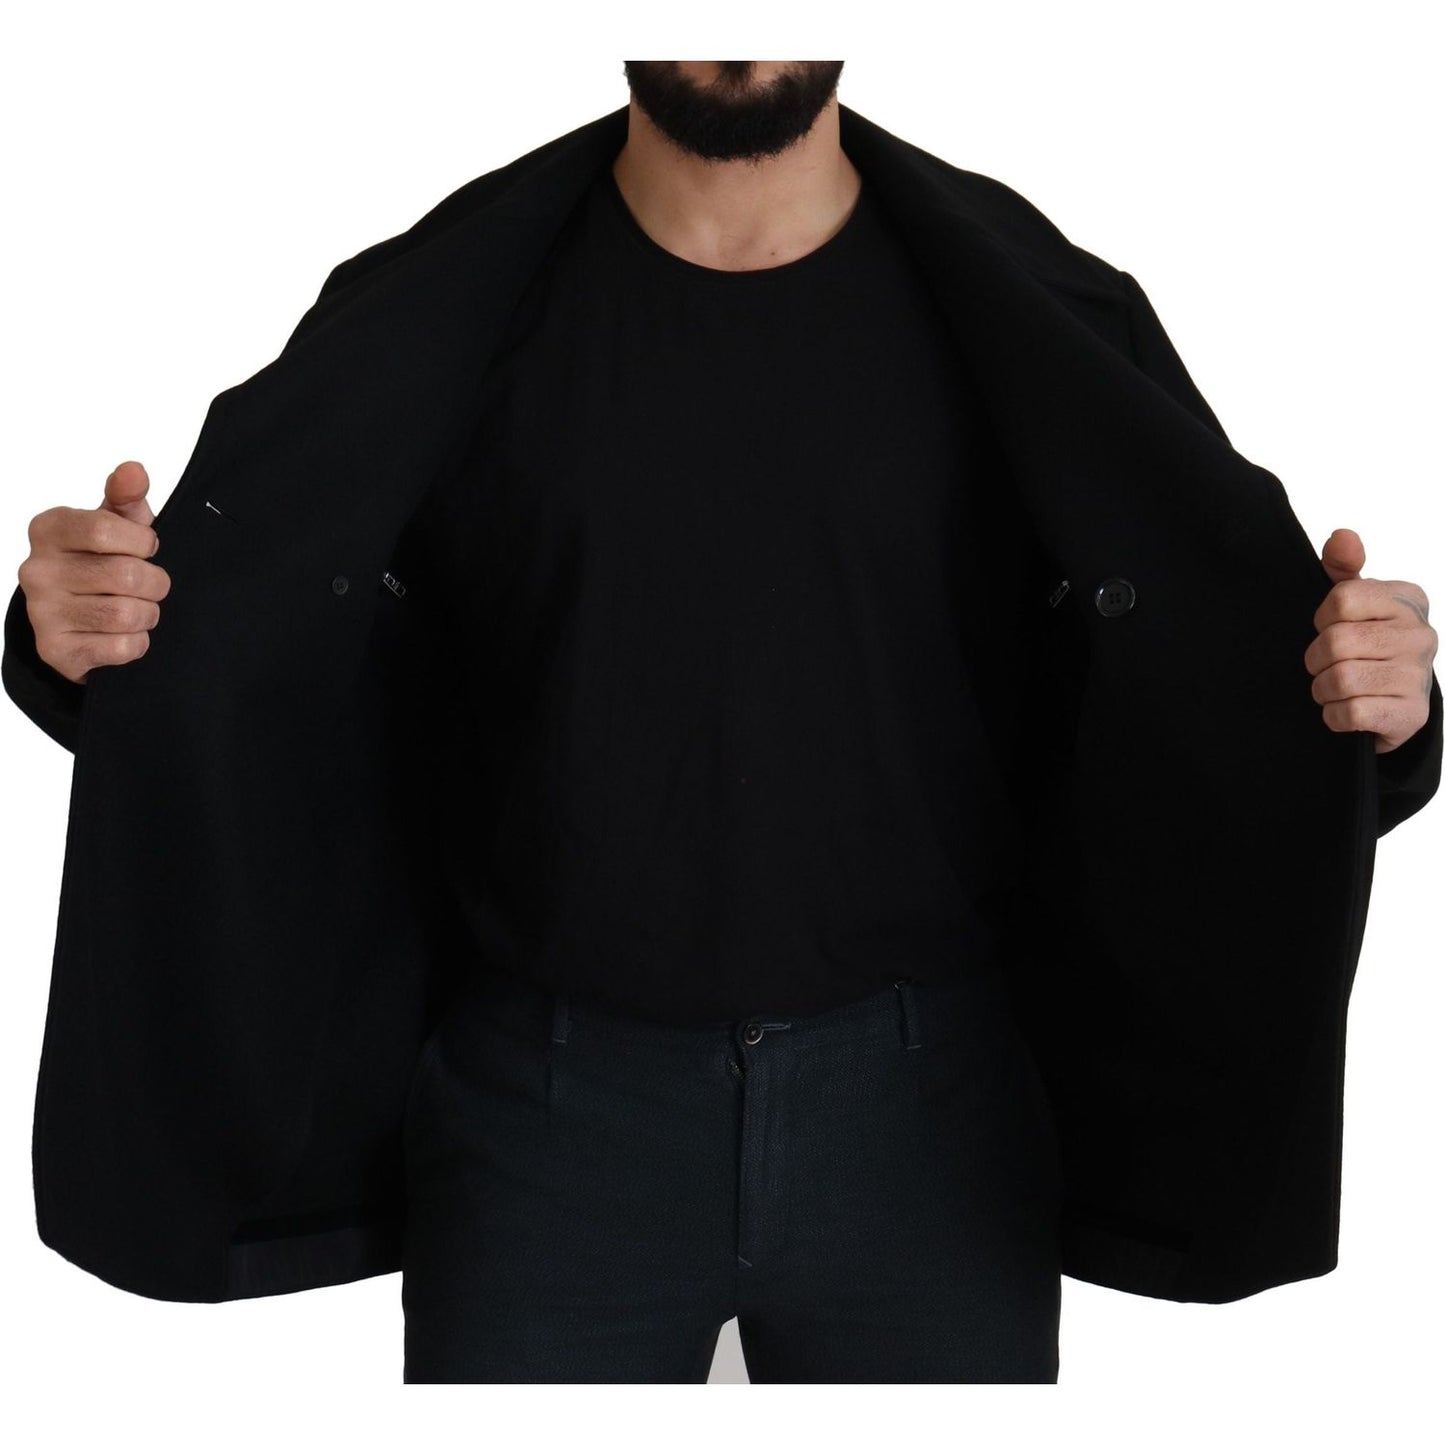 Dolce & Gabbana Elegant Double Breasted Wool Overcoat black-wool-trench-overcoat-jacket